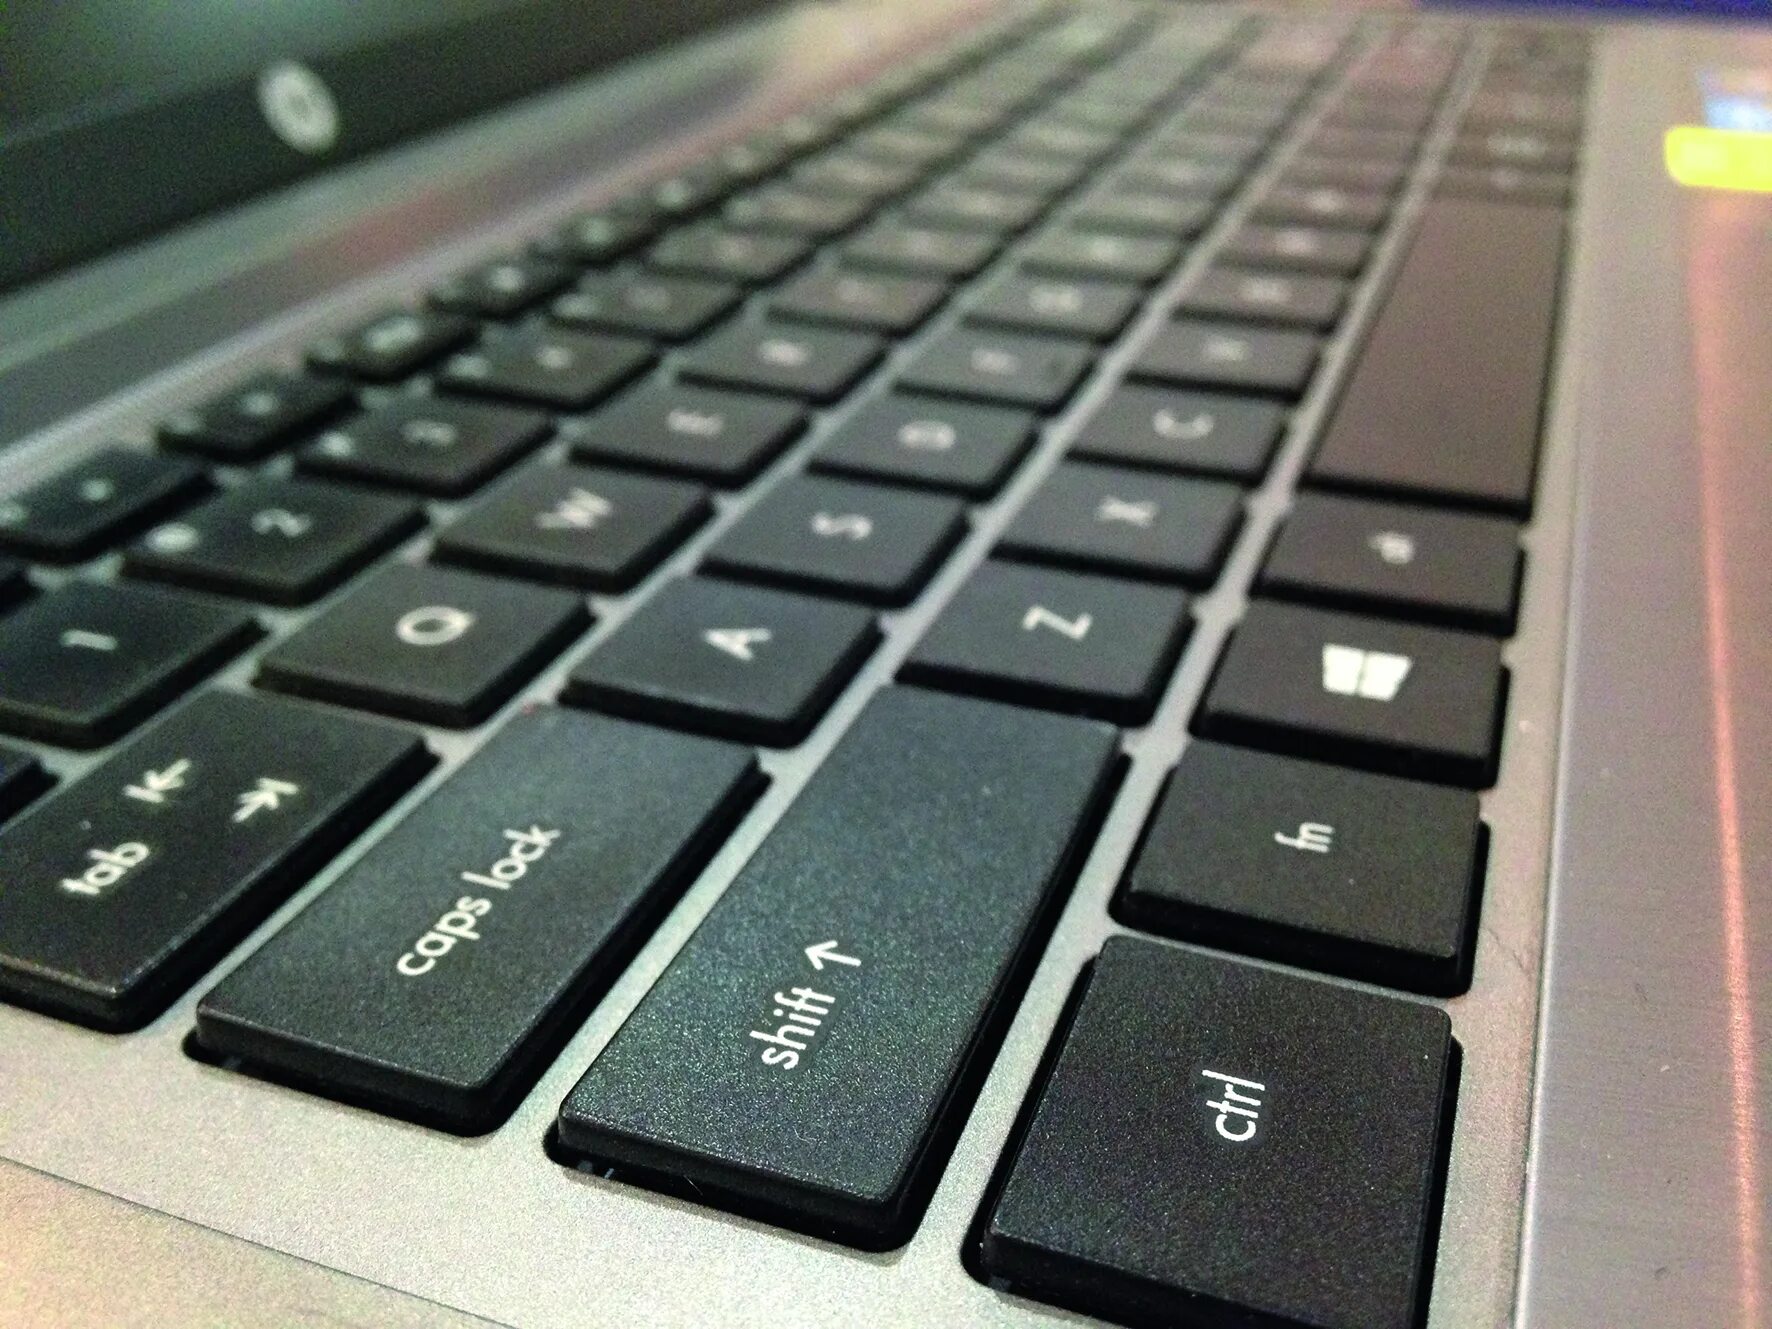 Клавиатура ноутбука. Клавиша ноутбука. Клавиатура для компьютера ноутбучного типа. Фотография клавиатура компьютера ноутбука.